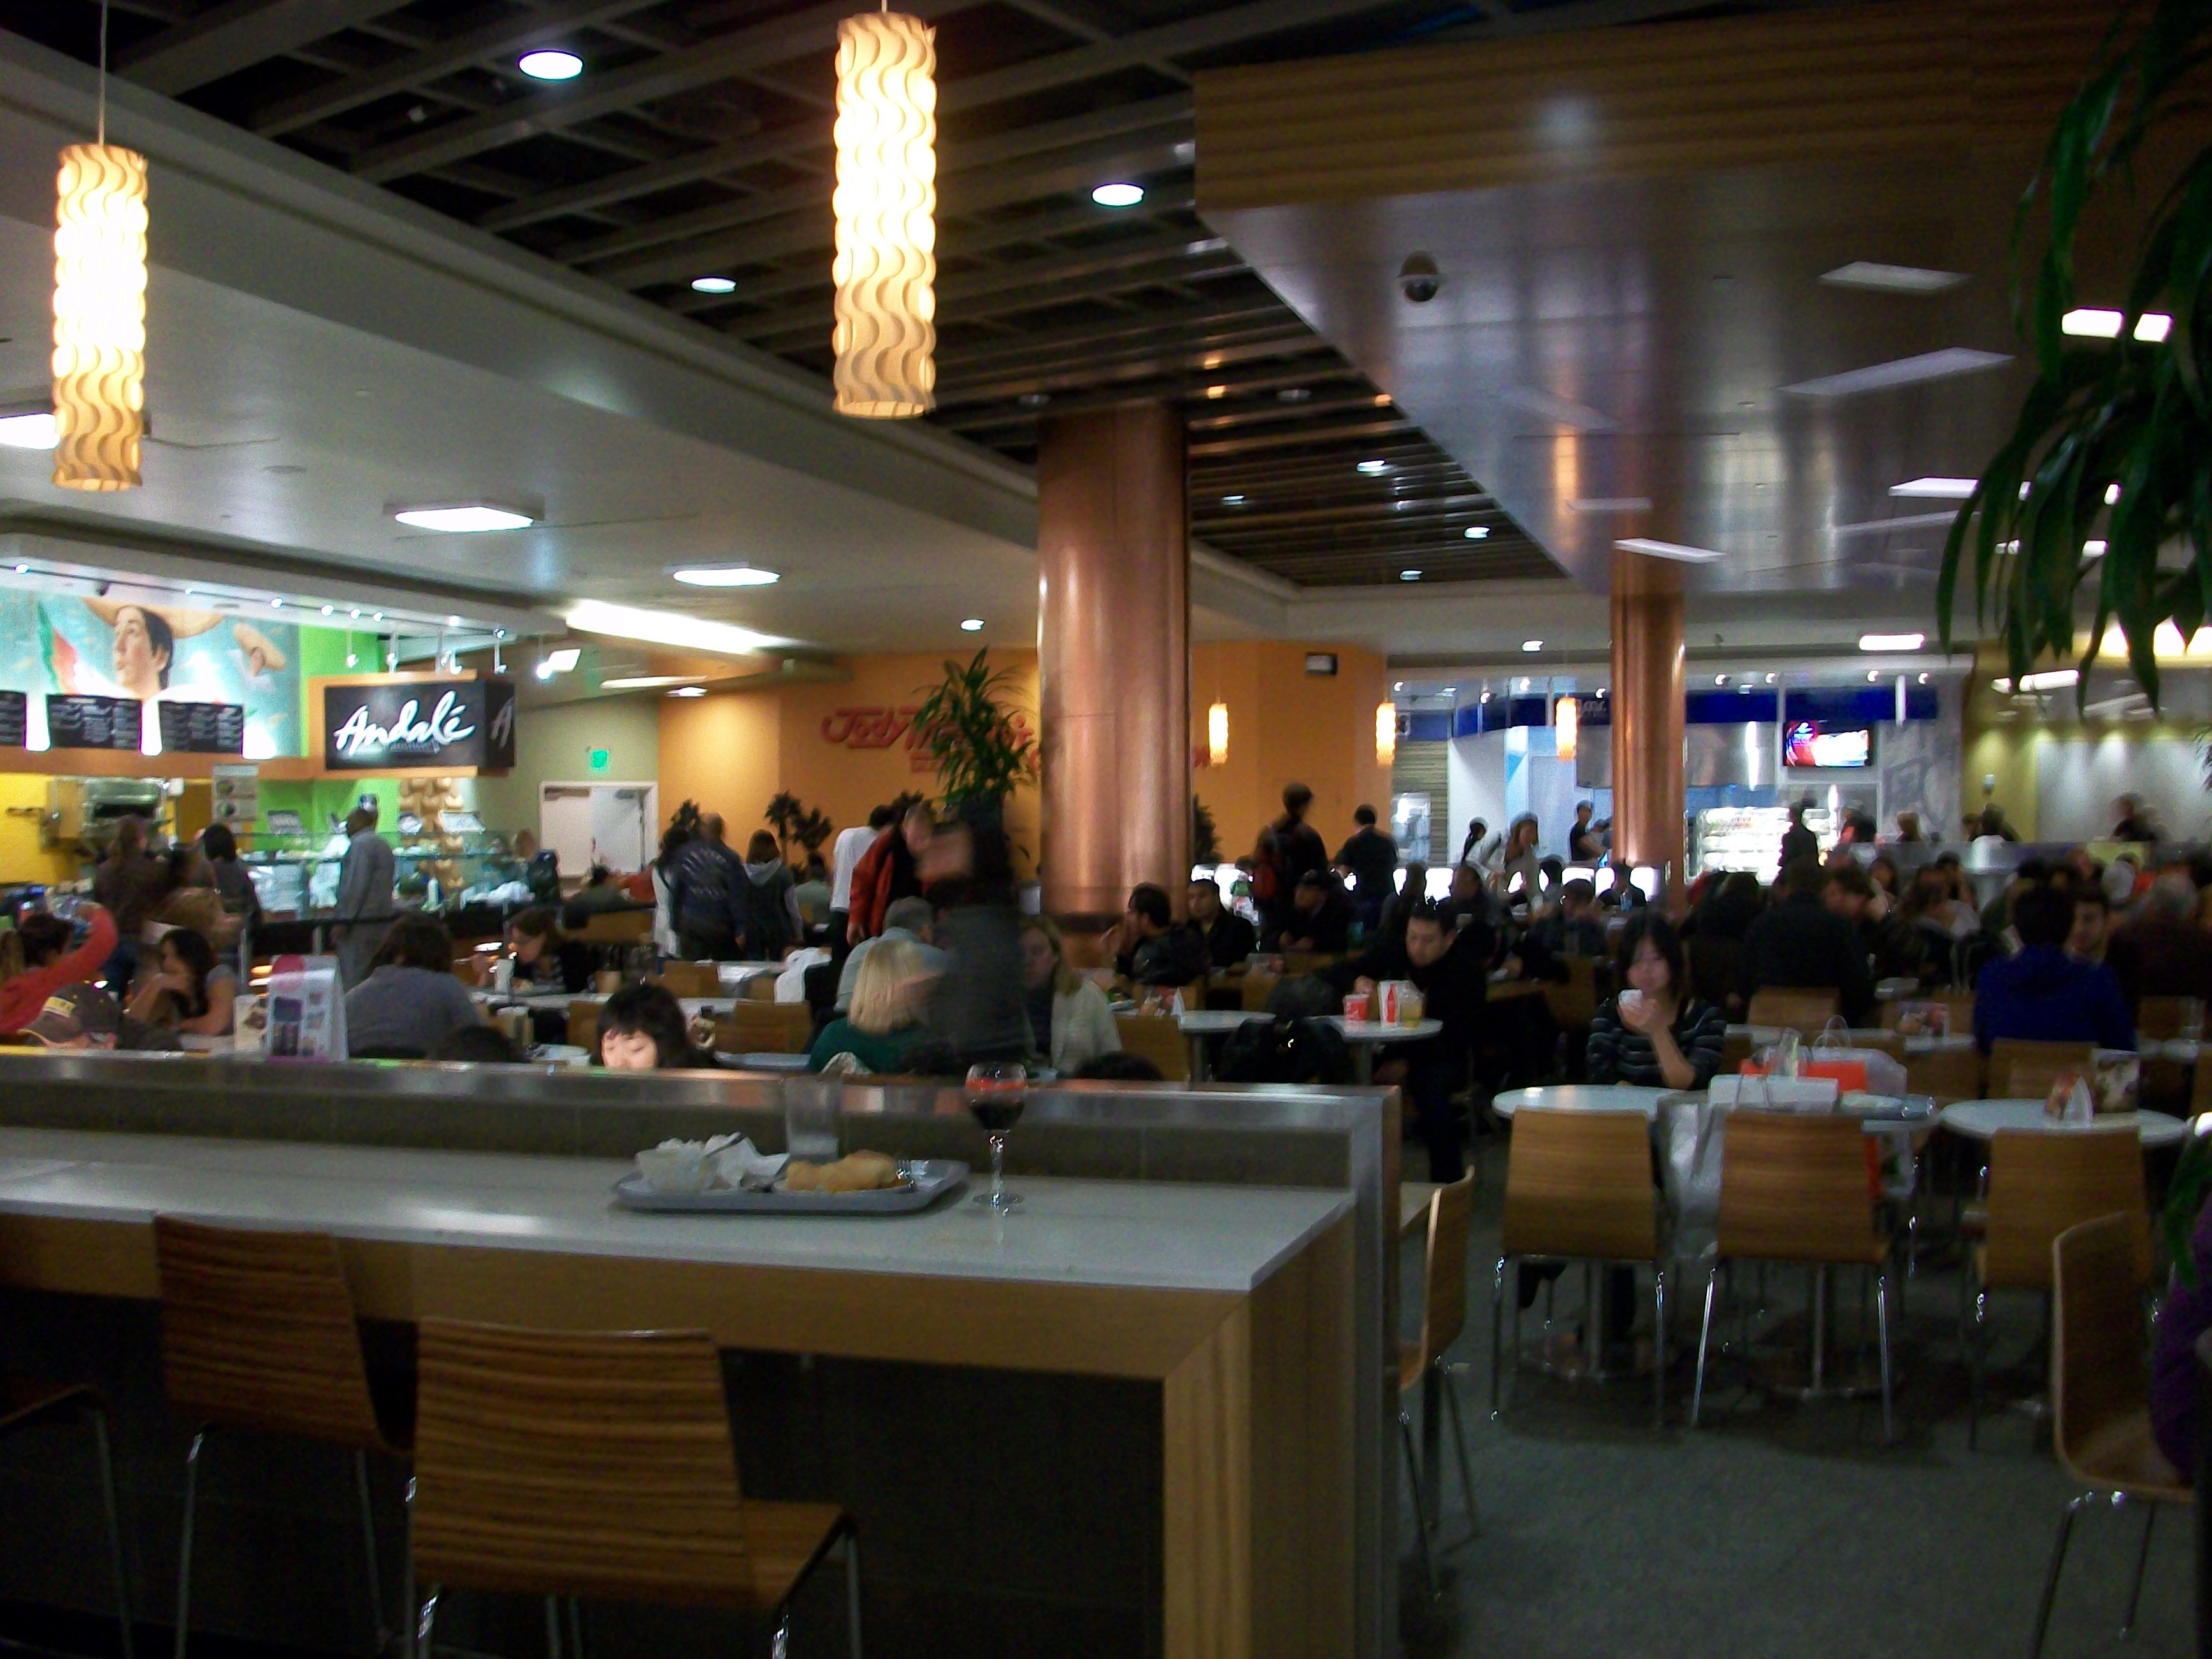 Westfield shopping centre interior, food court, stratford, london